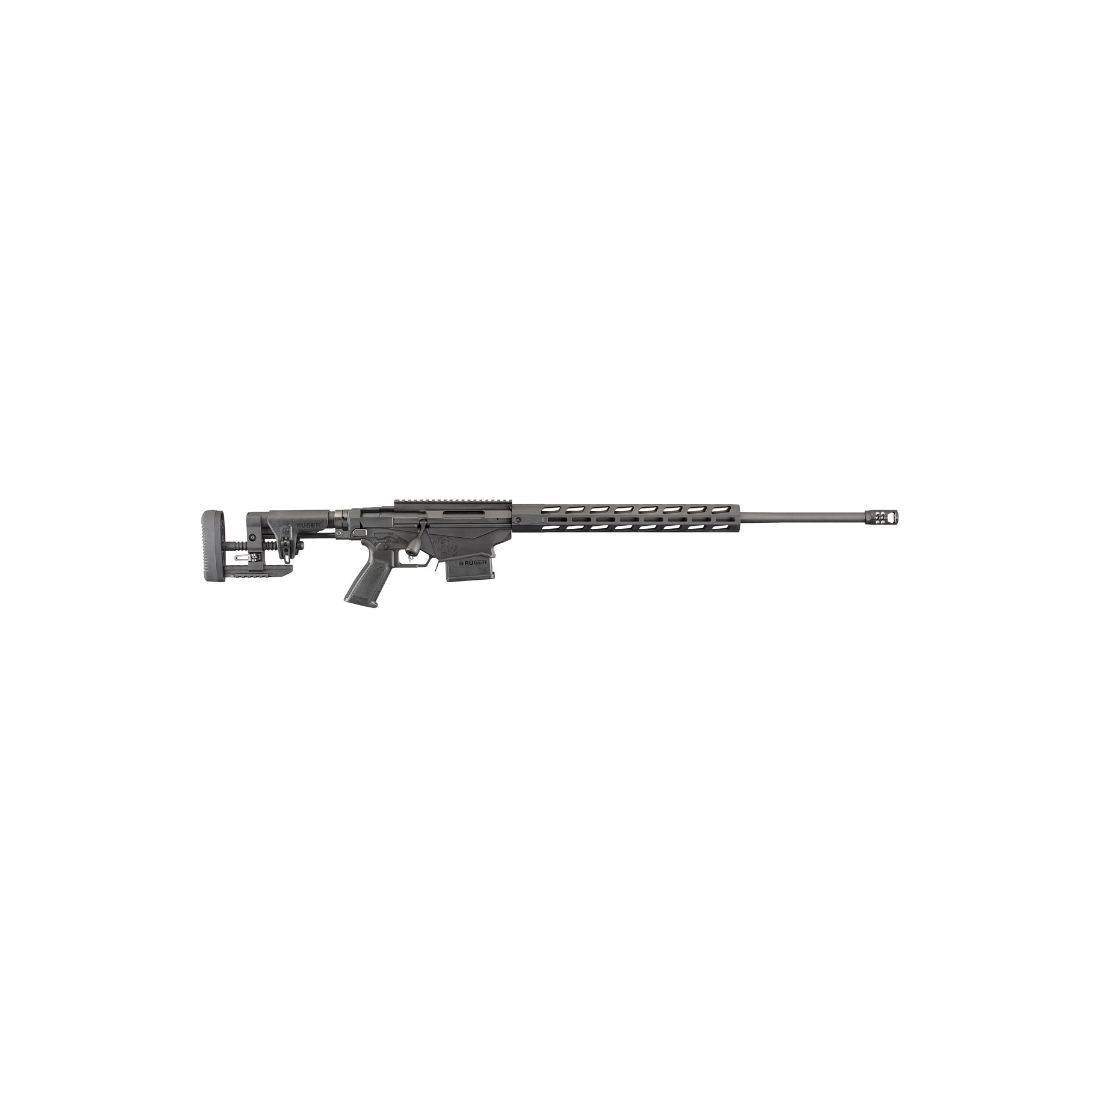 Ruger Precision Rifle 308Win 61cm Long Range Repetierbüchse - ab Lager verfügbar